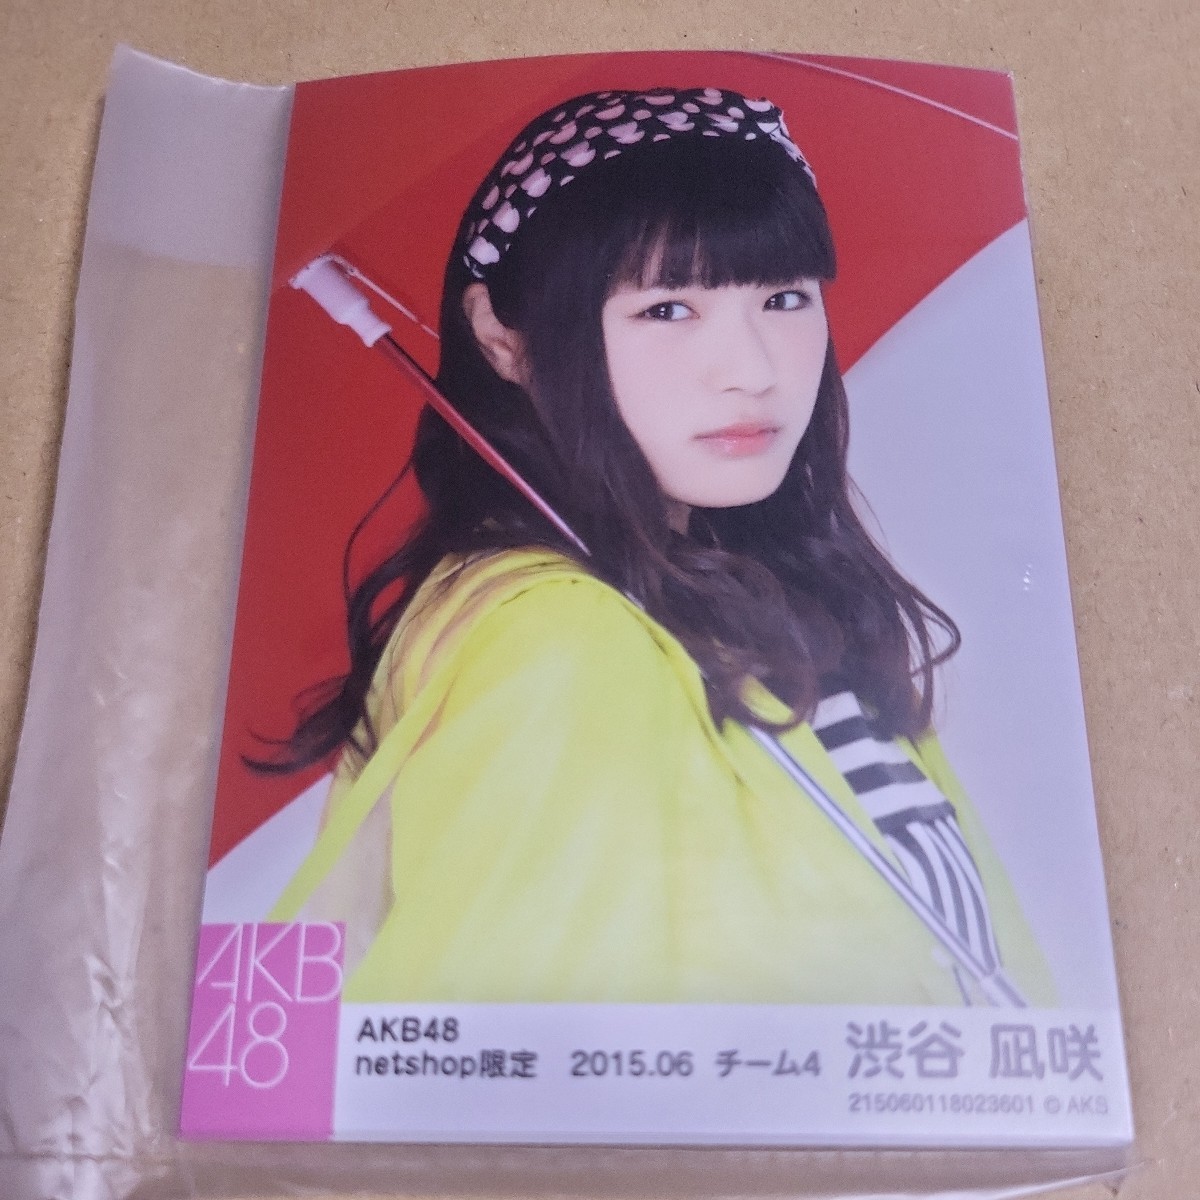 NMB48 渋谷凪咲 AKB48 netshop限定個別生写真 2015.06 5種 5枚セット_画像1